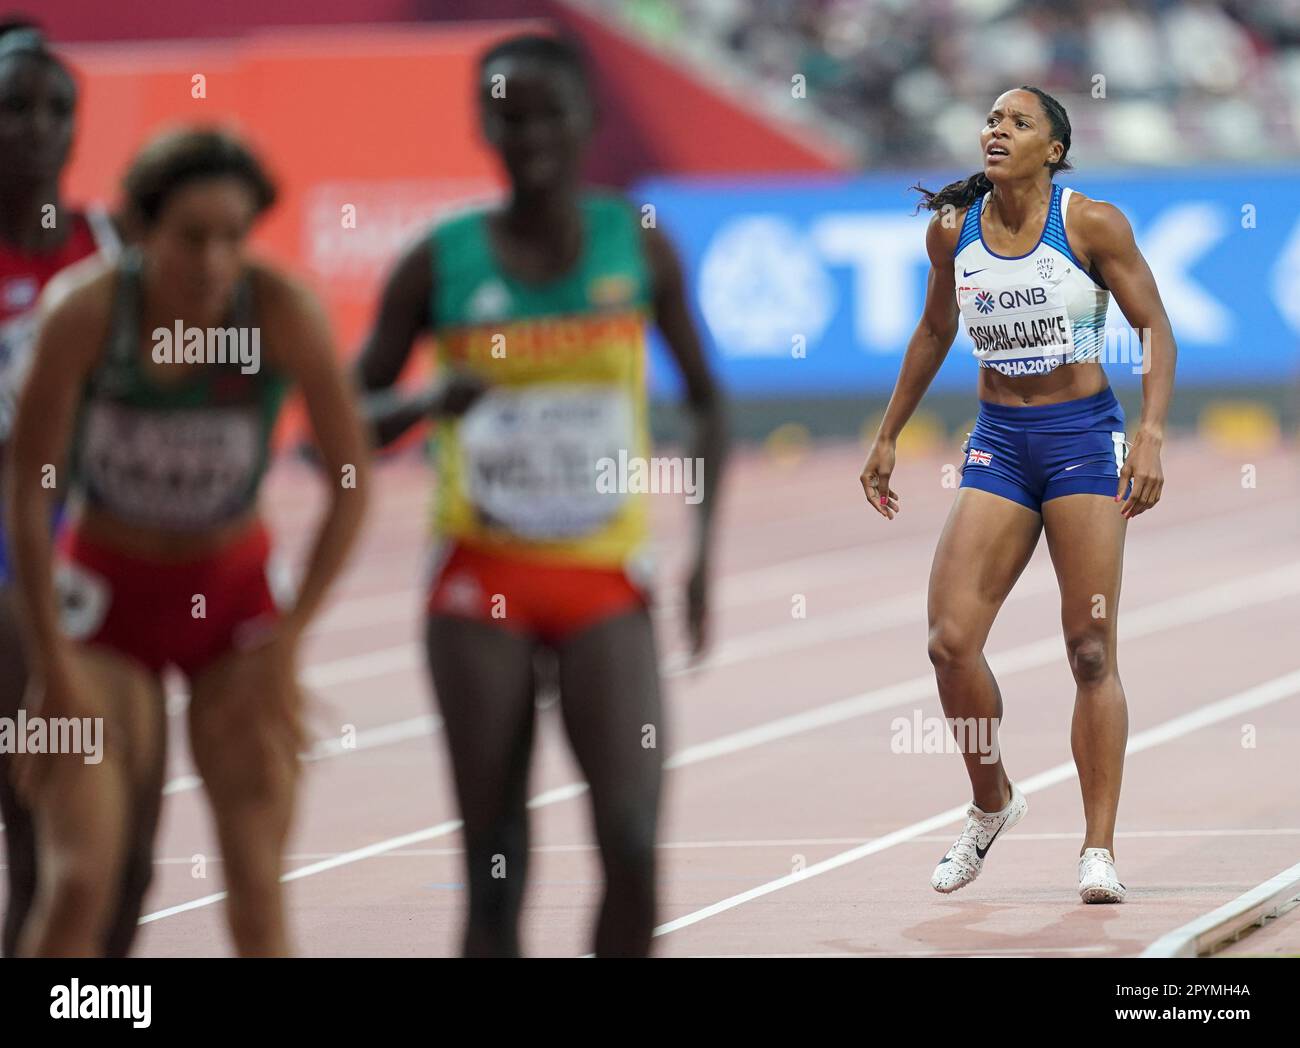 Shelayna Oskan-Clarke running the 800m at the 2019 World Athletics ...